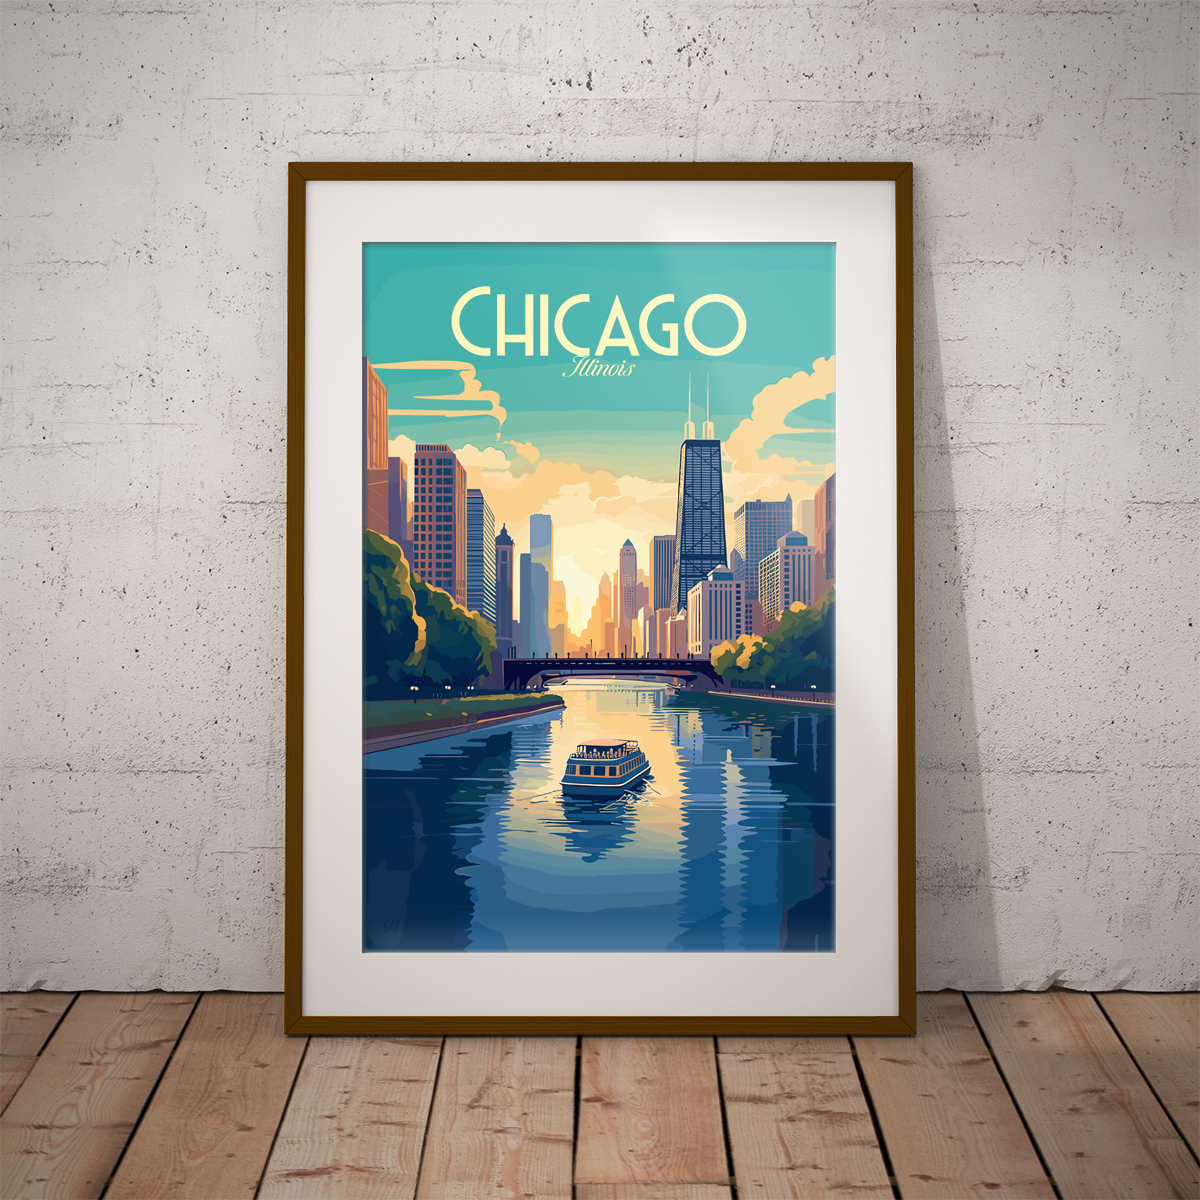 Chicago - River poster by bon voyage design